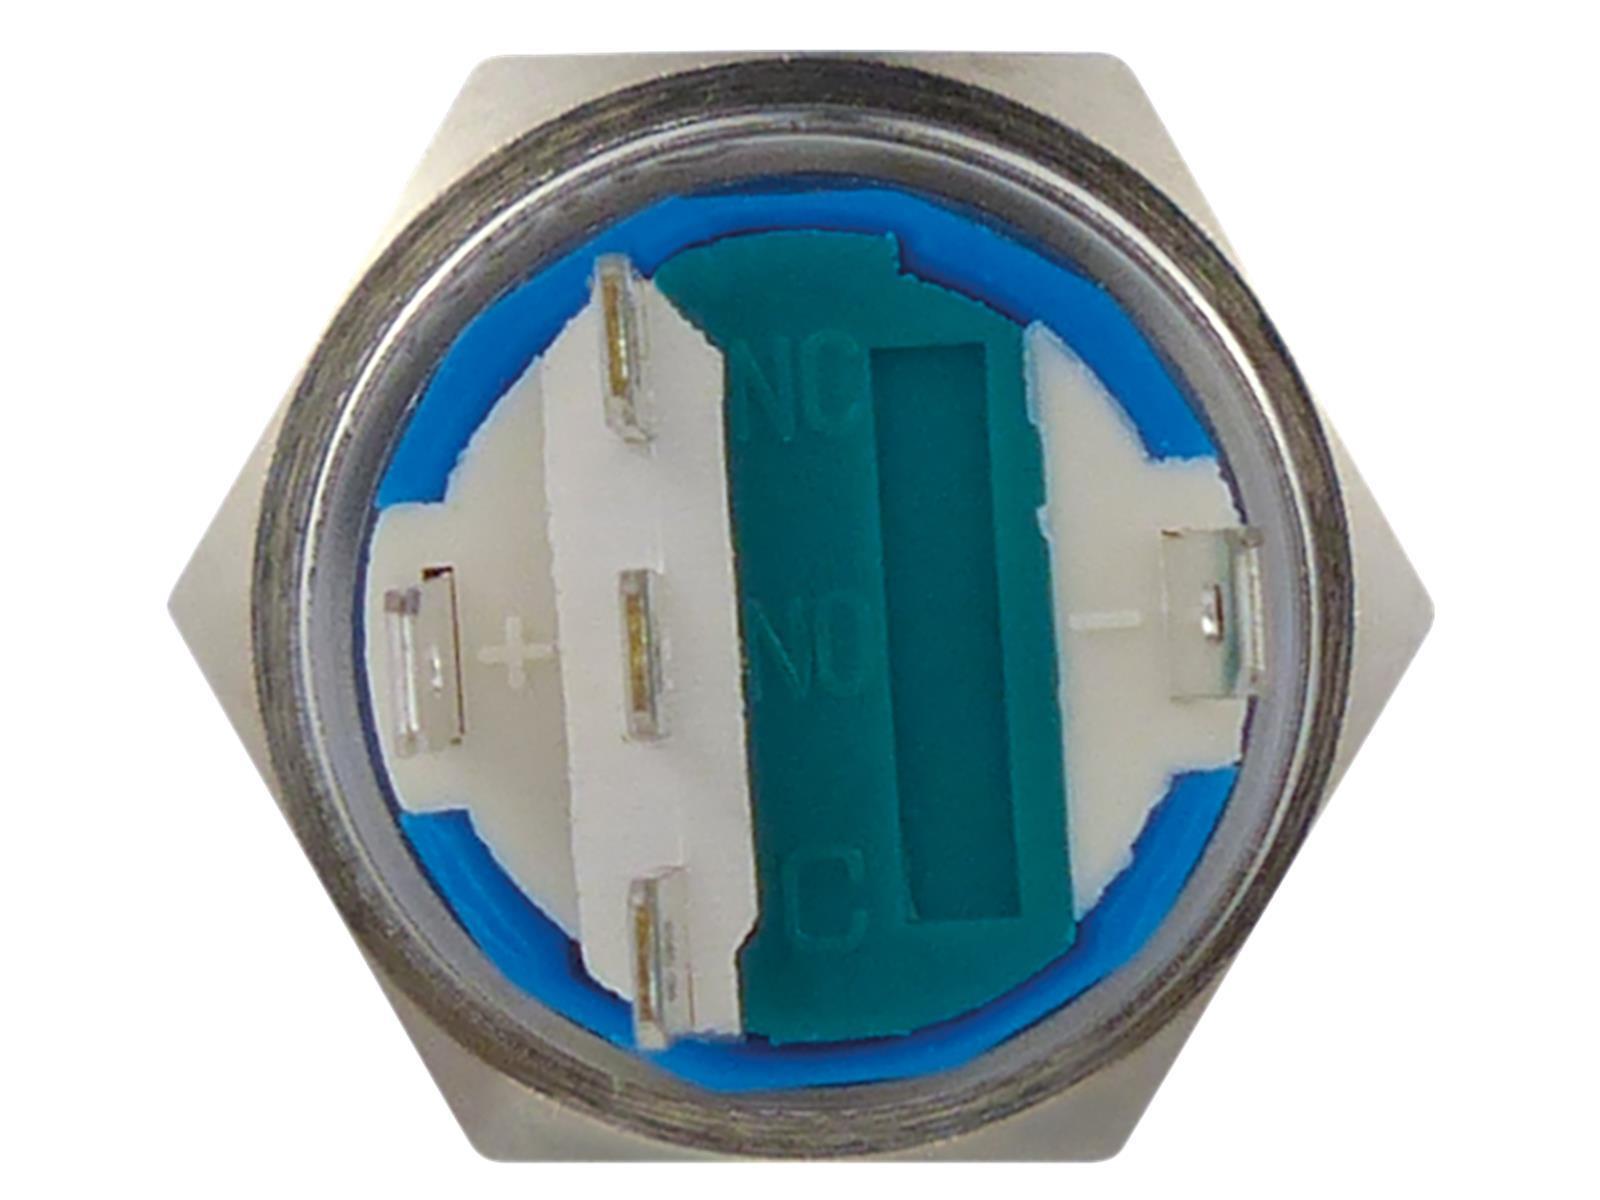 Vollmetallschalter mit Ringbeleuchtung, grün, 19mm-Ø, 250V, 5A, Lötanschluss